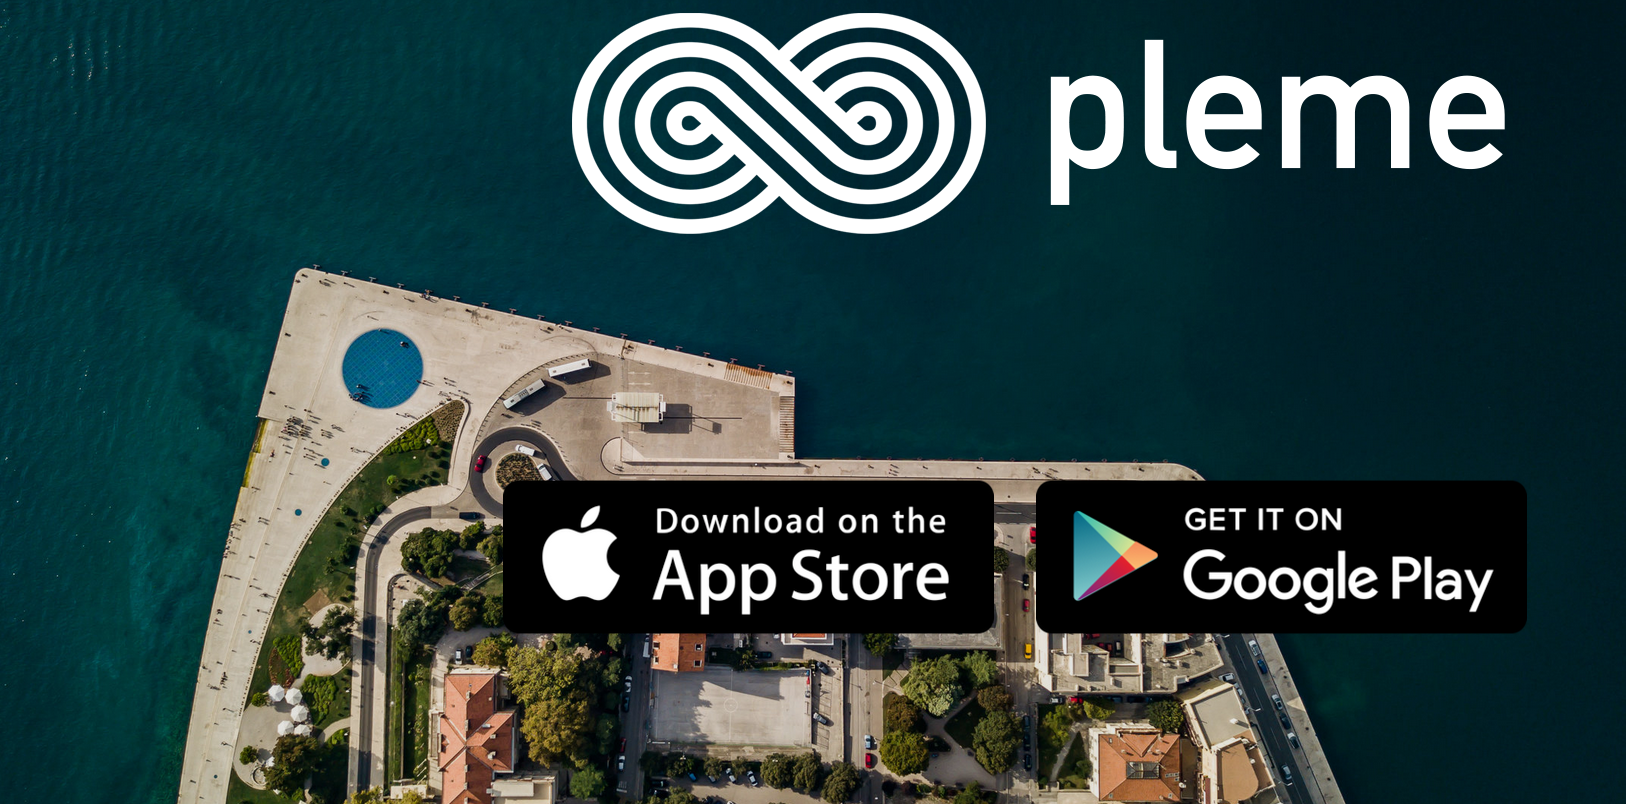 Pleme - A New Online Croatian Community